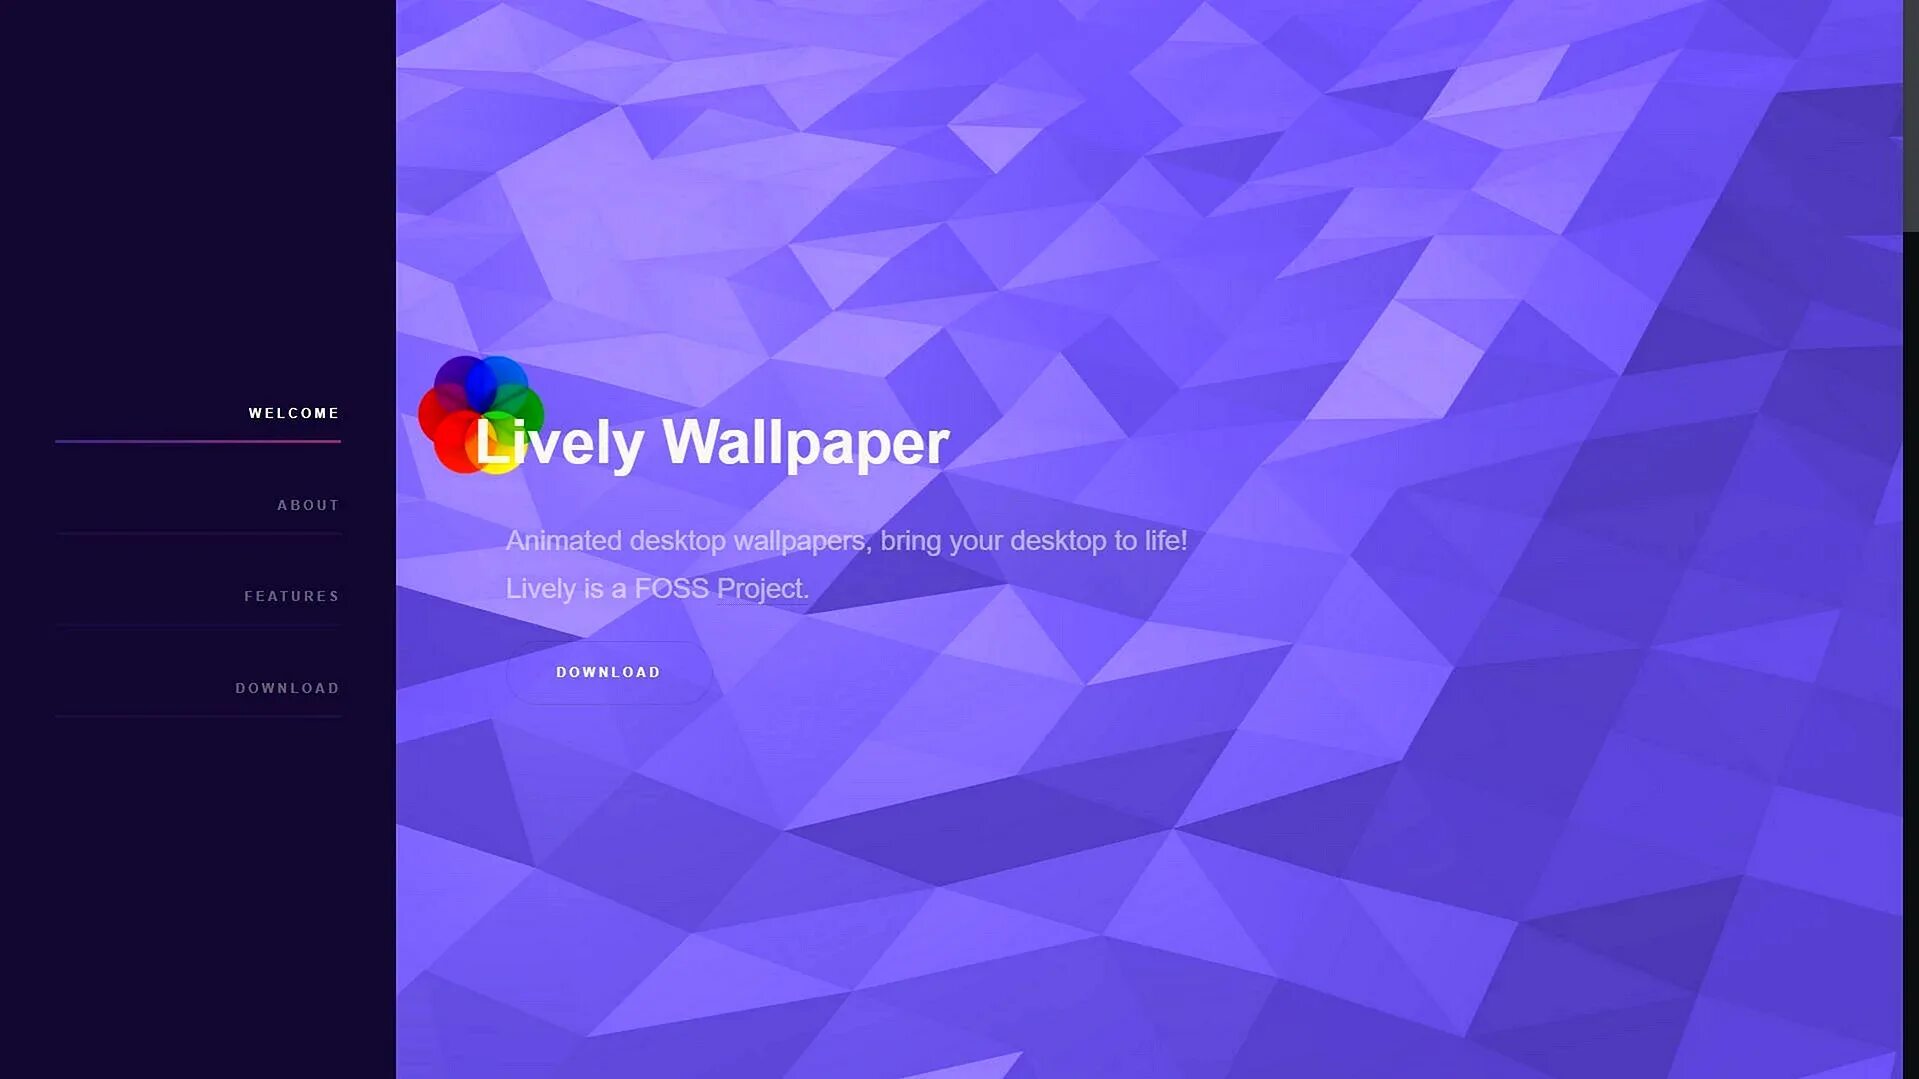 Microsoft lively wallpaper. Обои для Lively Wallpaper. Lively Wallpaper приложение. Обои для Ливели валпапер. Обои с приложения Wallpapers.